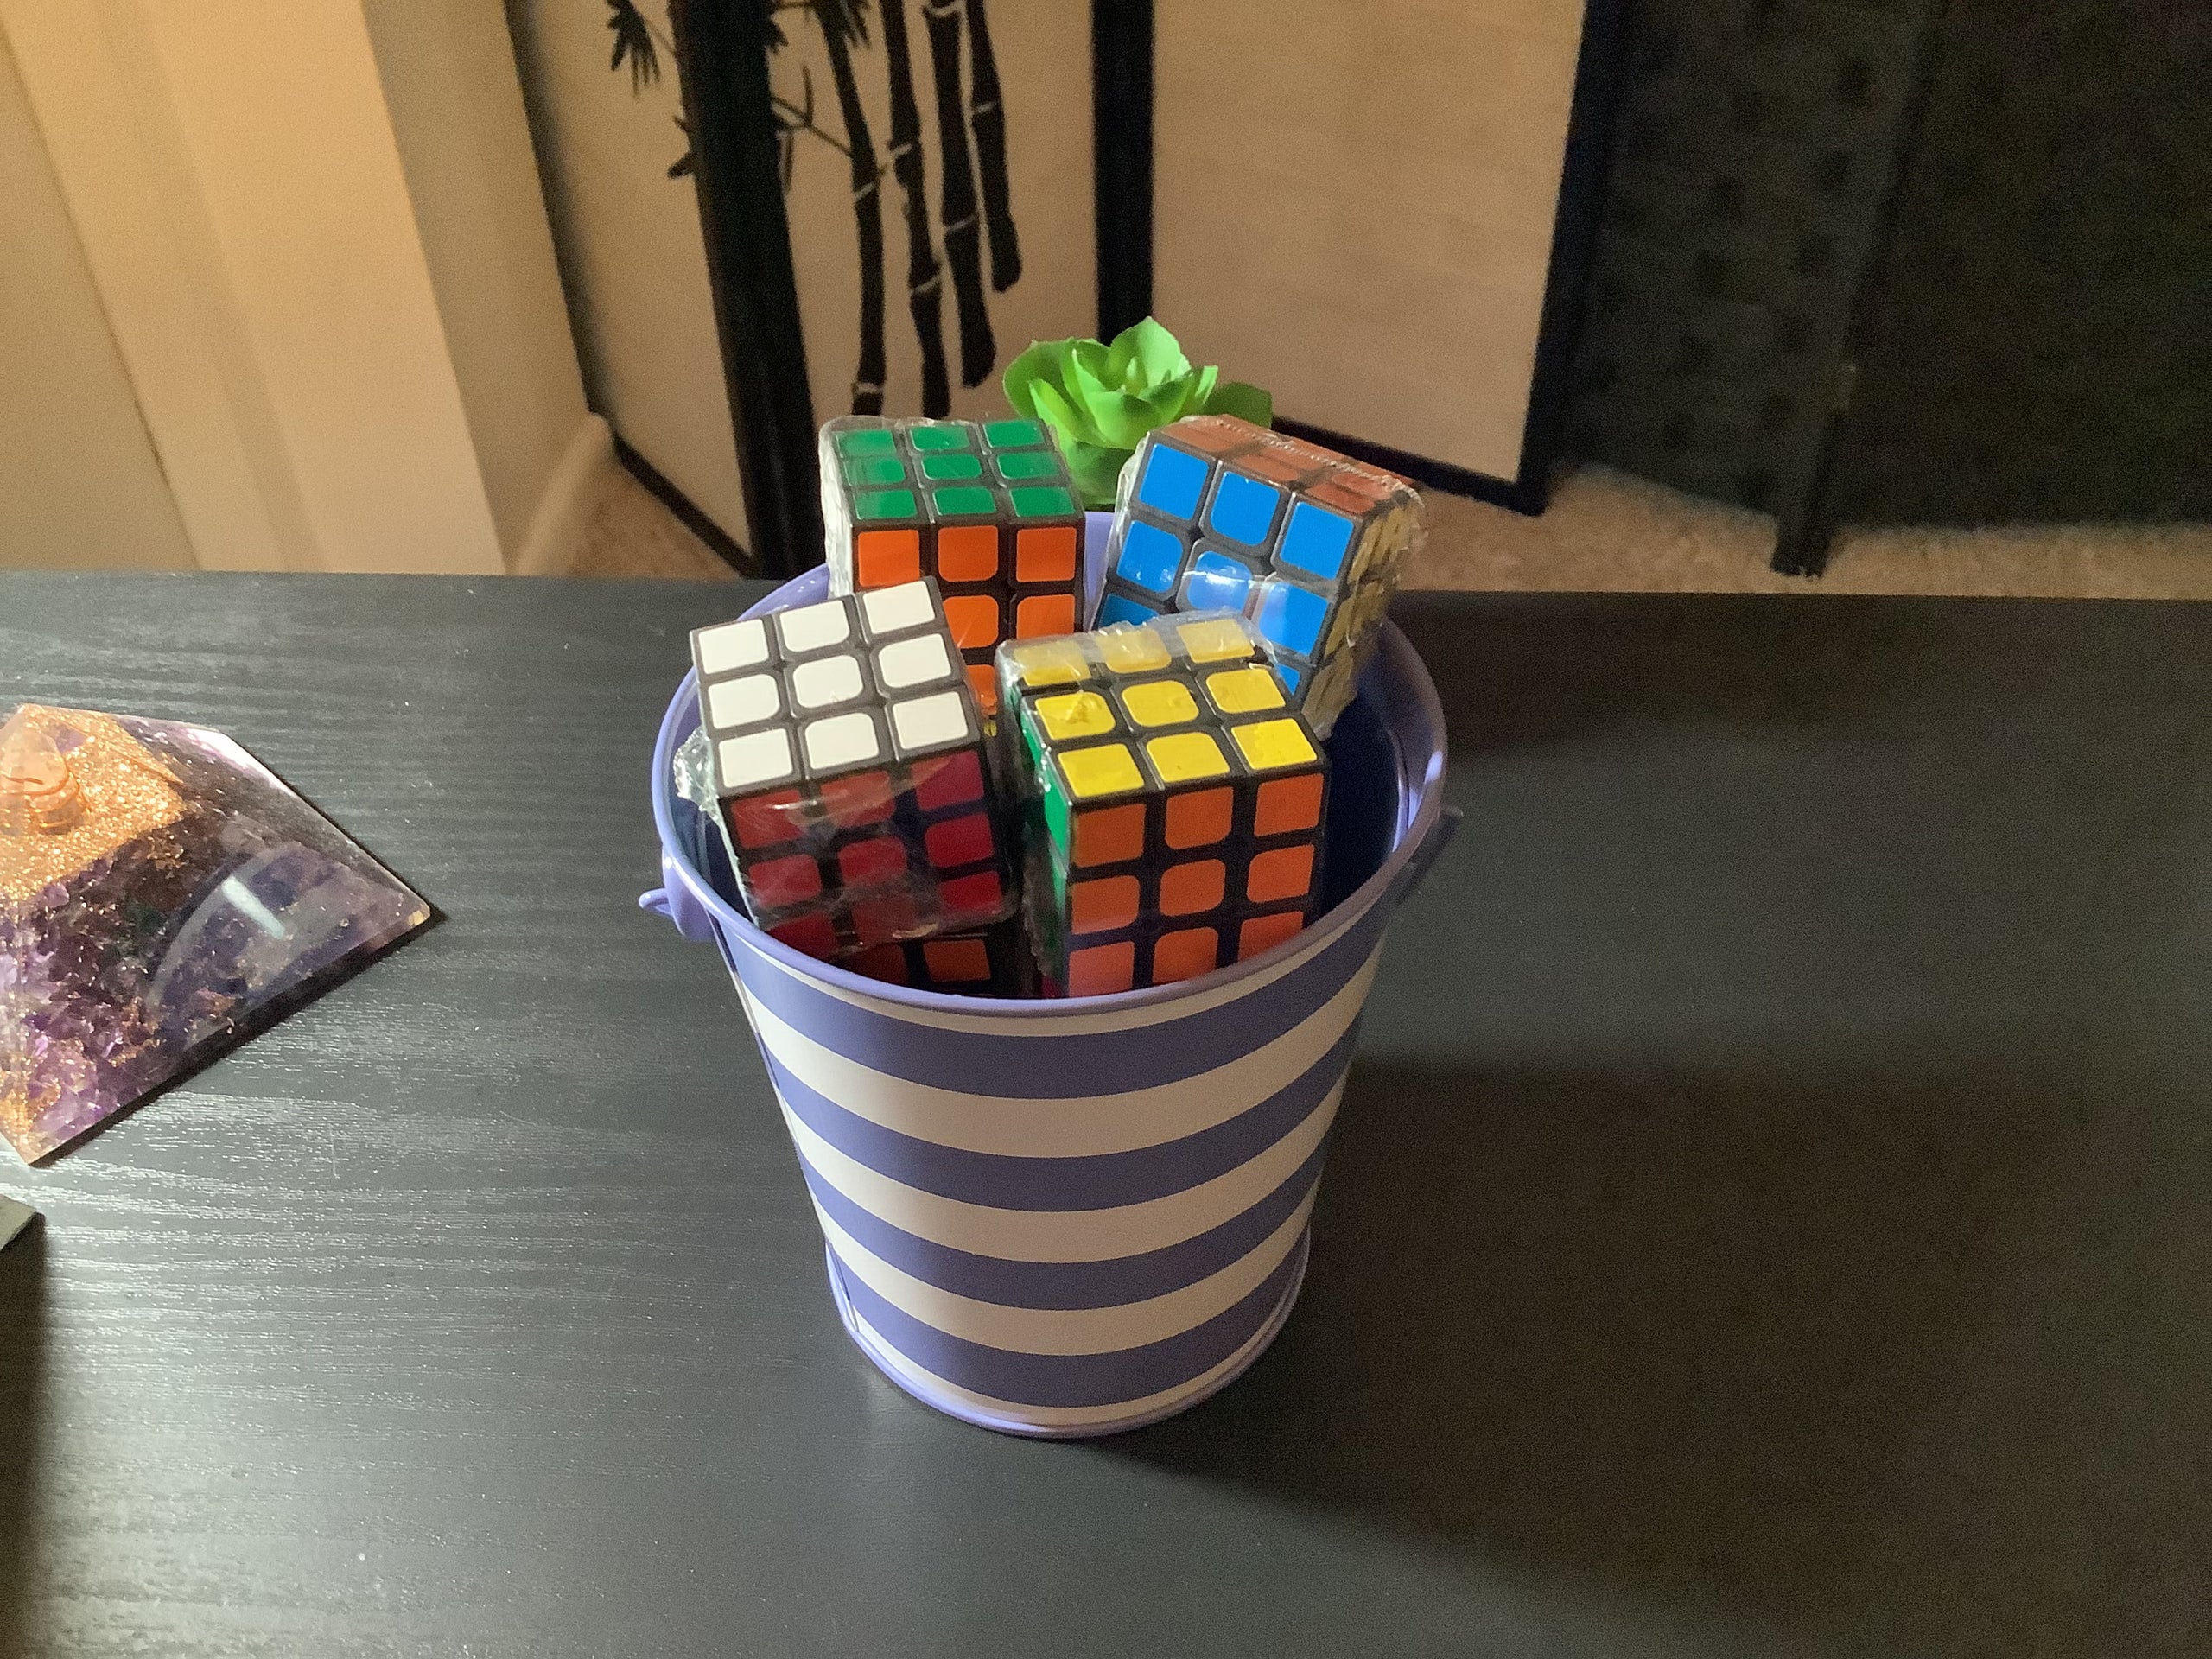 Purim Rubik's Cube - Mini